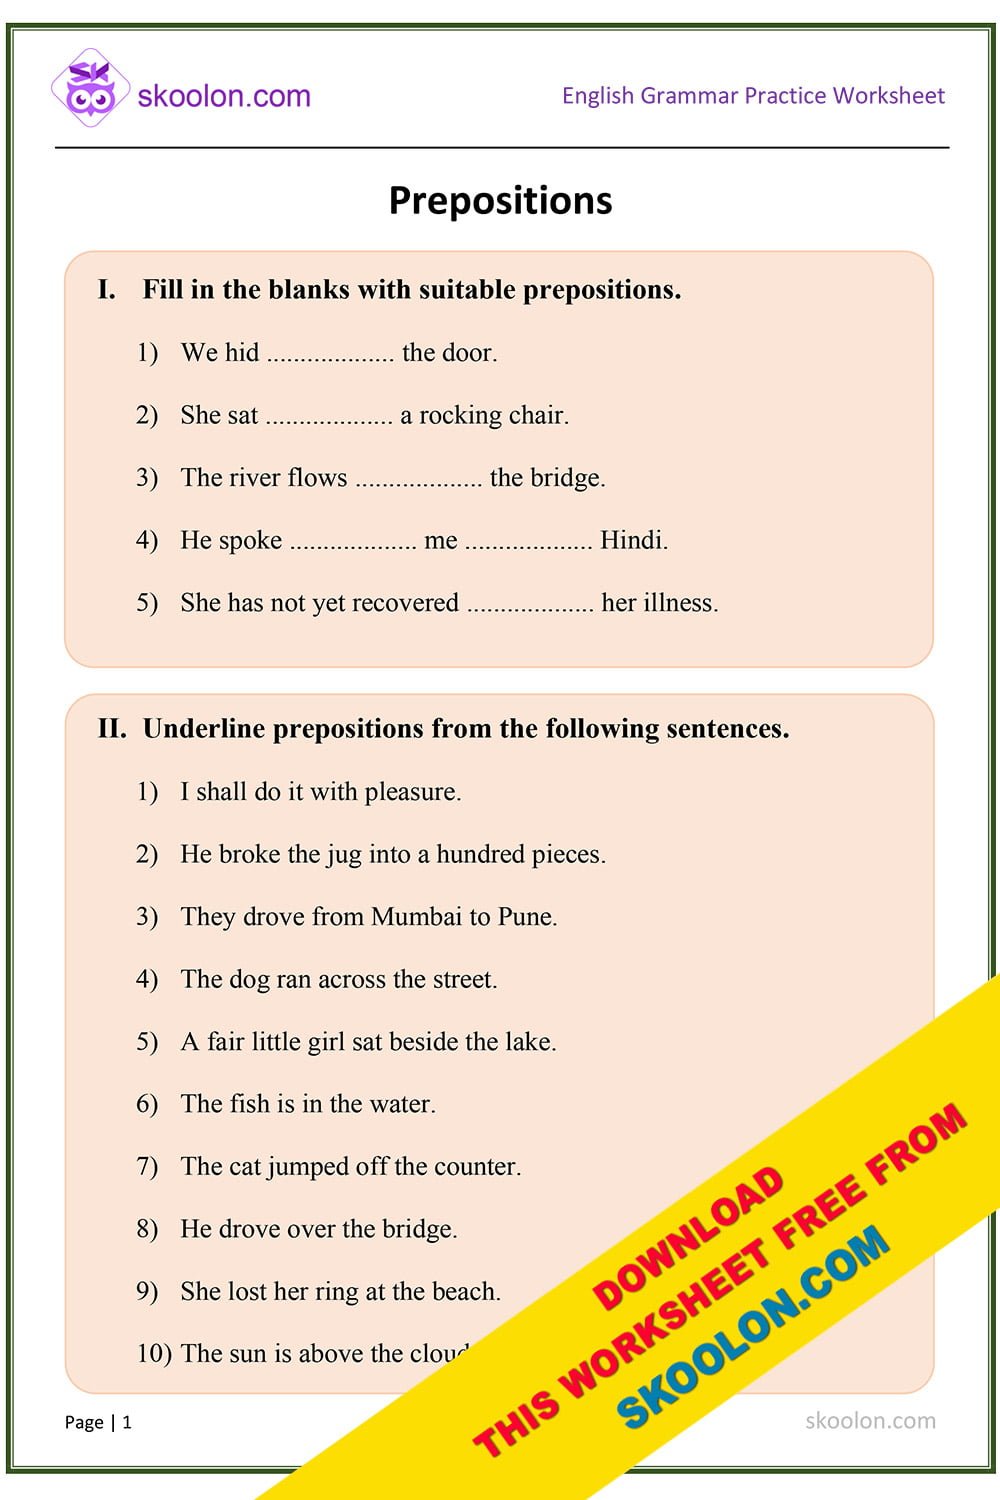 prepositions-2-skoolon